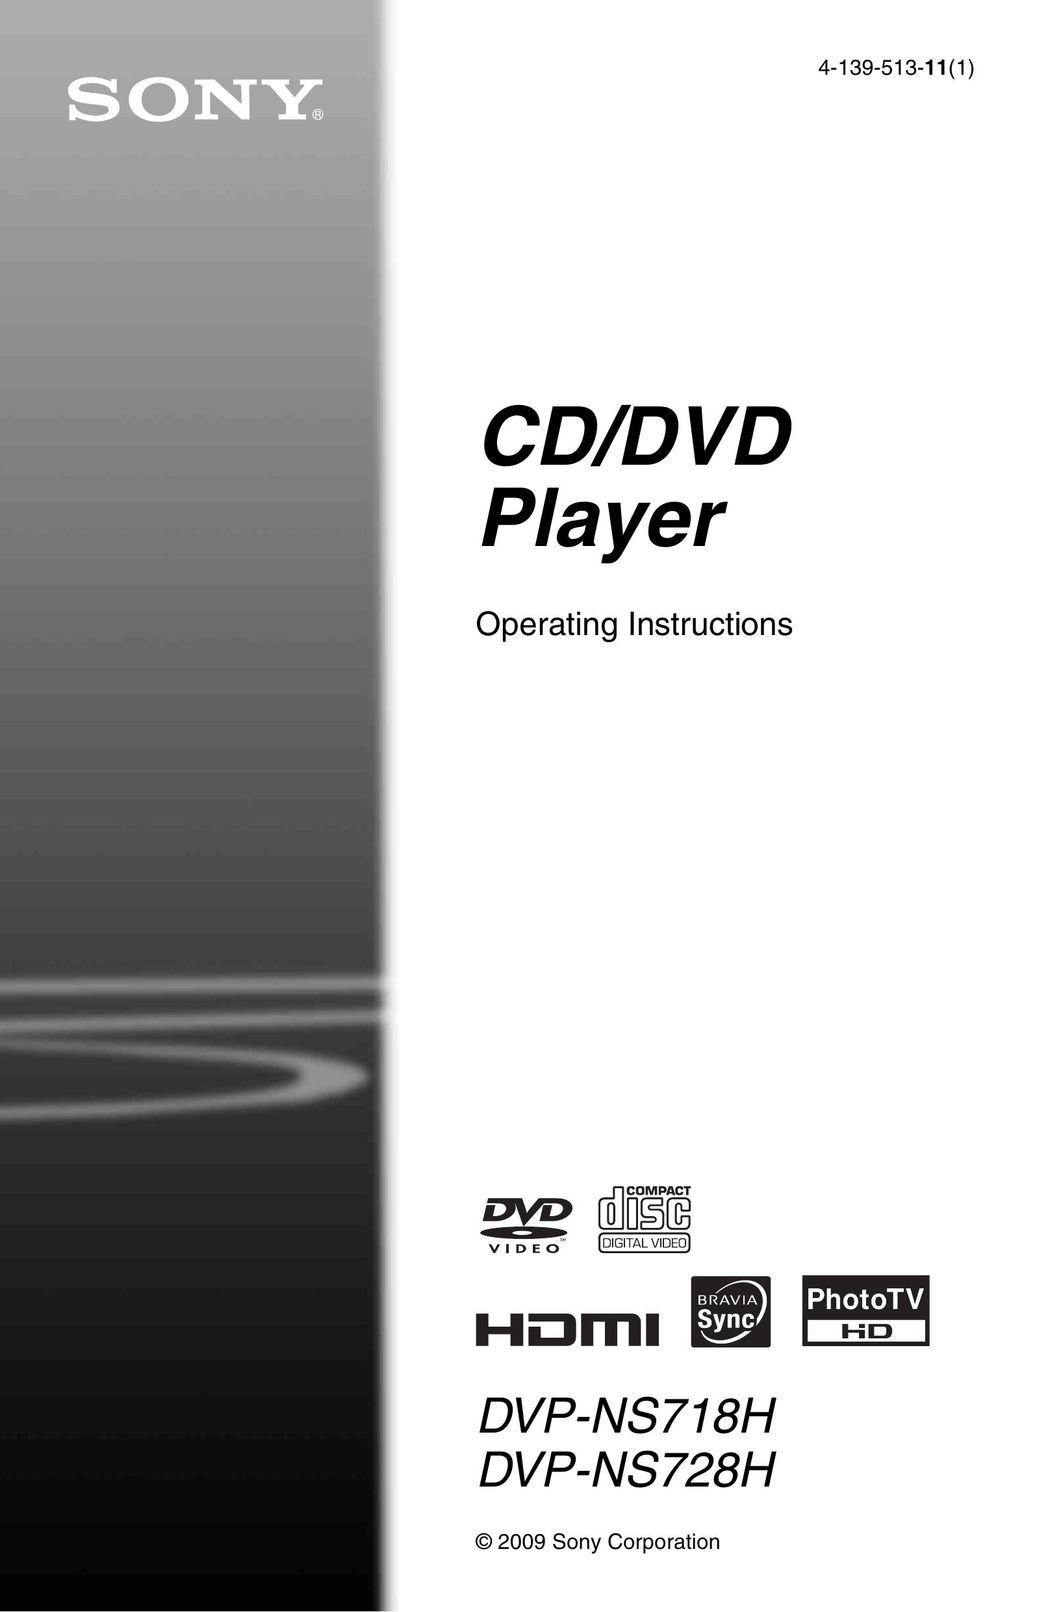 Sony 4-139-513-11(1) DVD Player User Manual